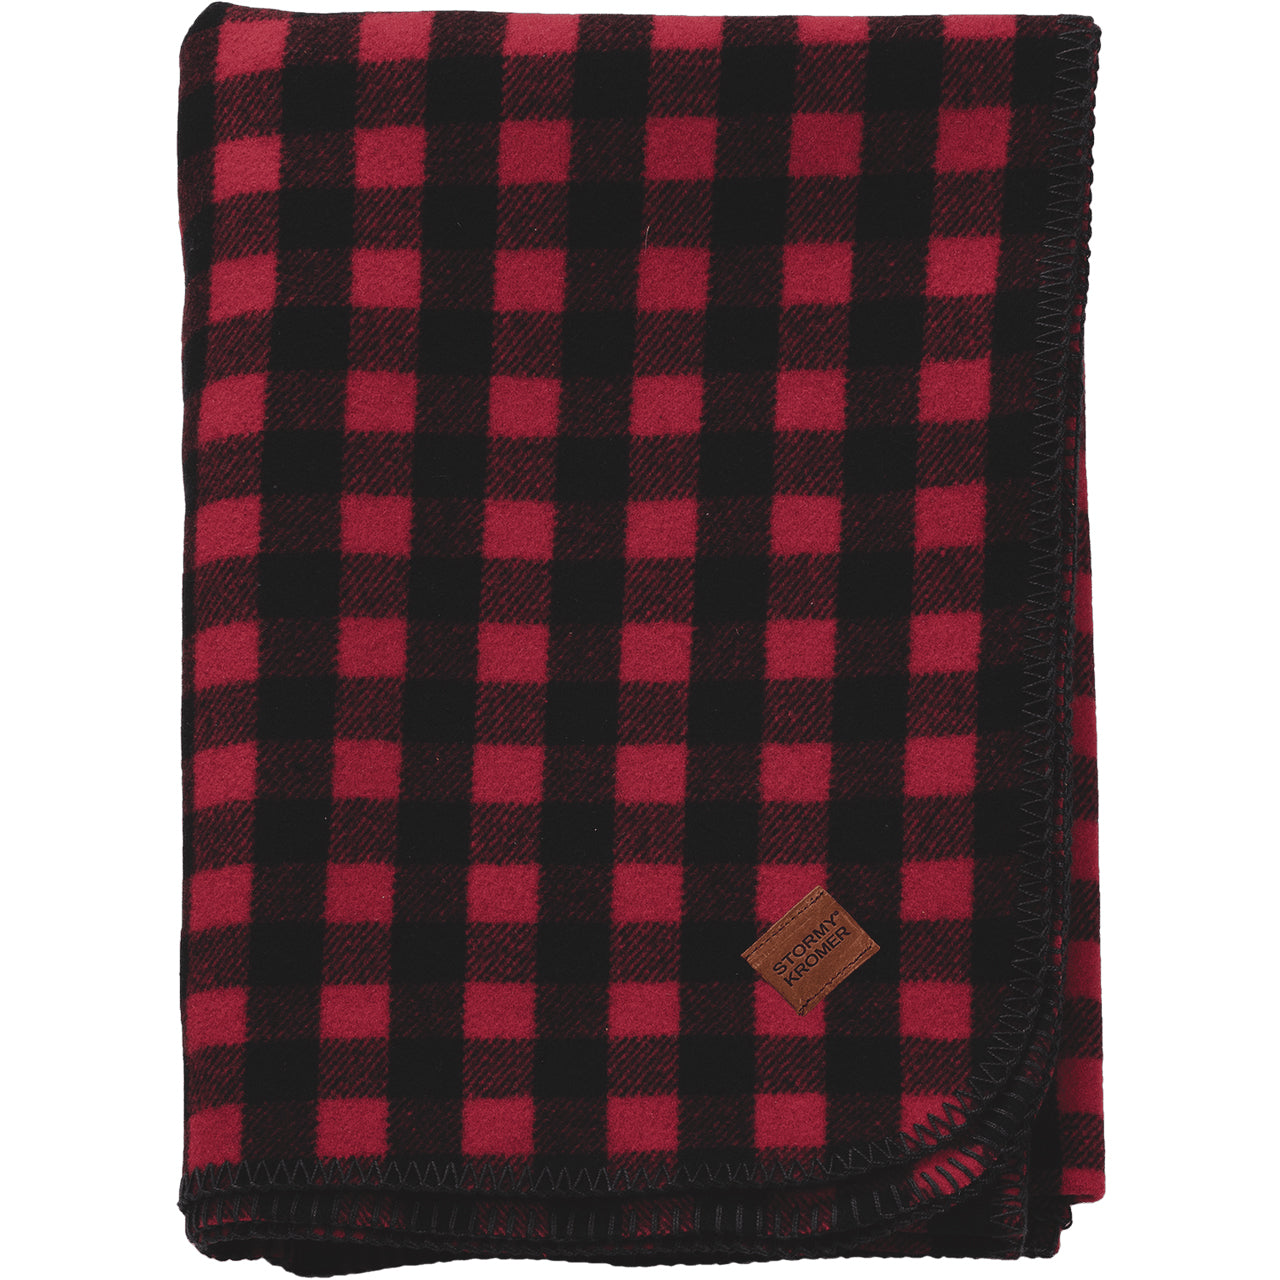 Stormy Kromer Wool Blend Blanket in Red/Black Buffalo Plaid